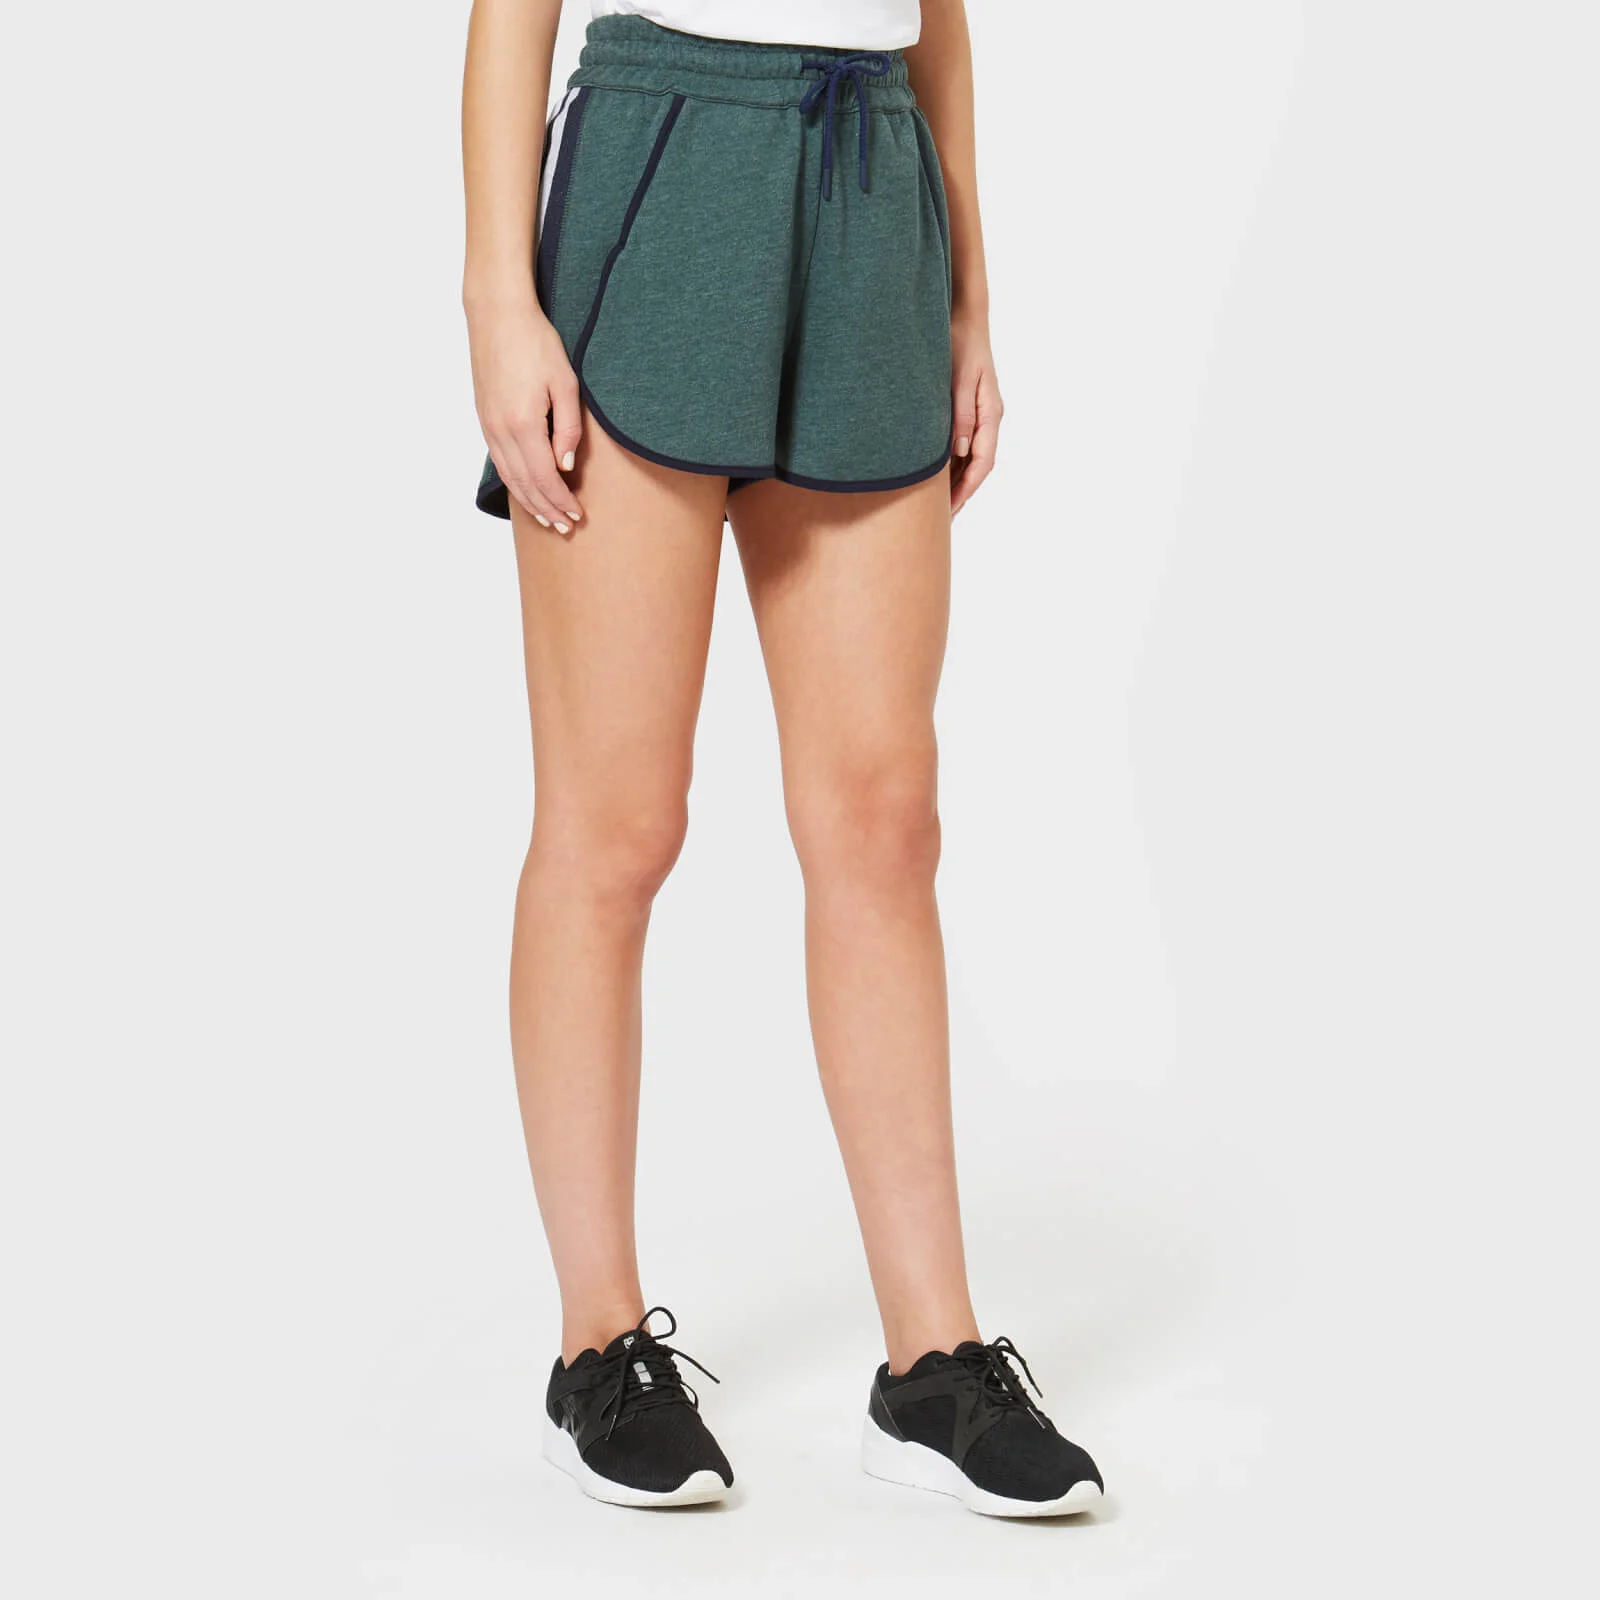 LNDR Women's Jog Shorts - Dark Green Image 1